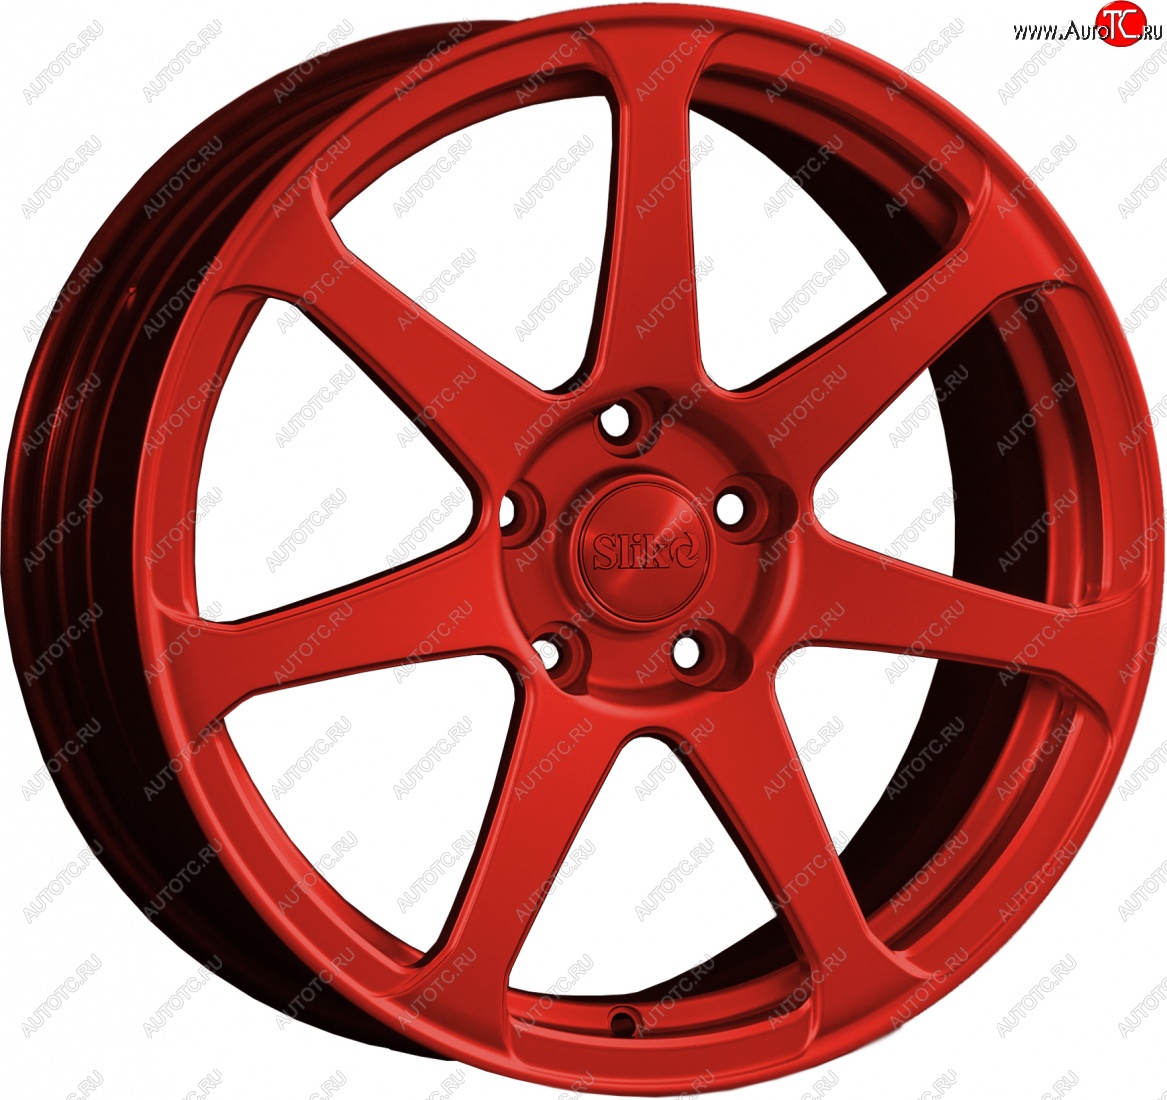 14 499 р. Кованый диск Slik classik R17x7.5 Candy RED красный 7.5x17 Chevrolet Lacetti хэтчбек (2002-2013) 4x114.3xDIA56.6xET44.0 (Цвет: Candy RED красный 7.5x17)